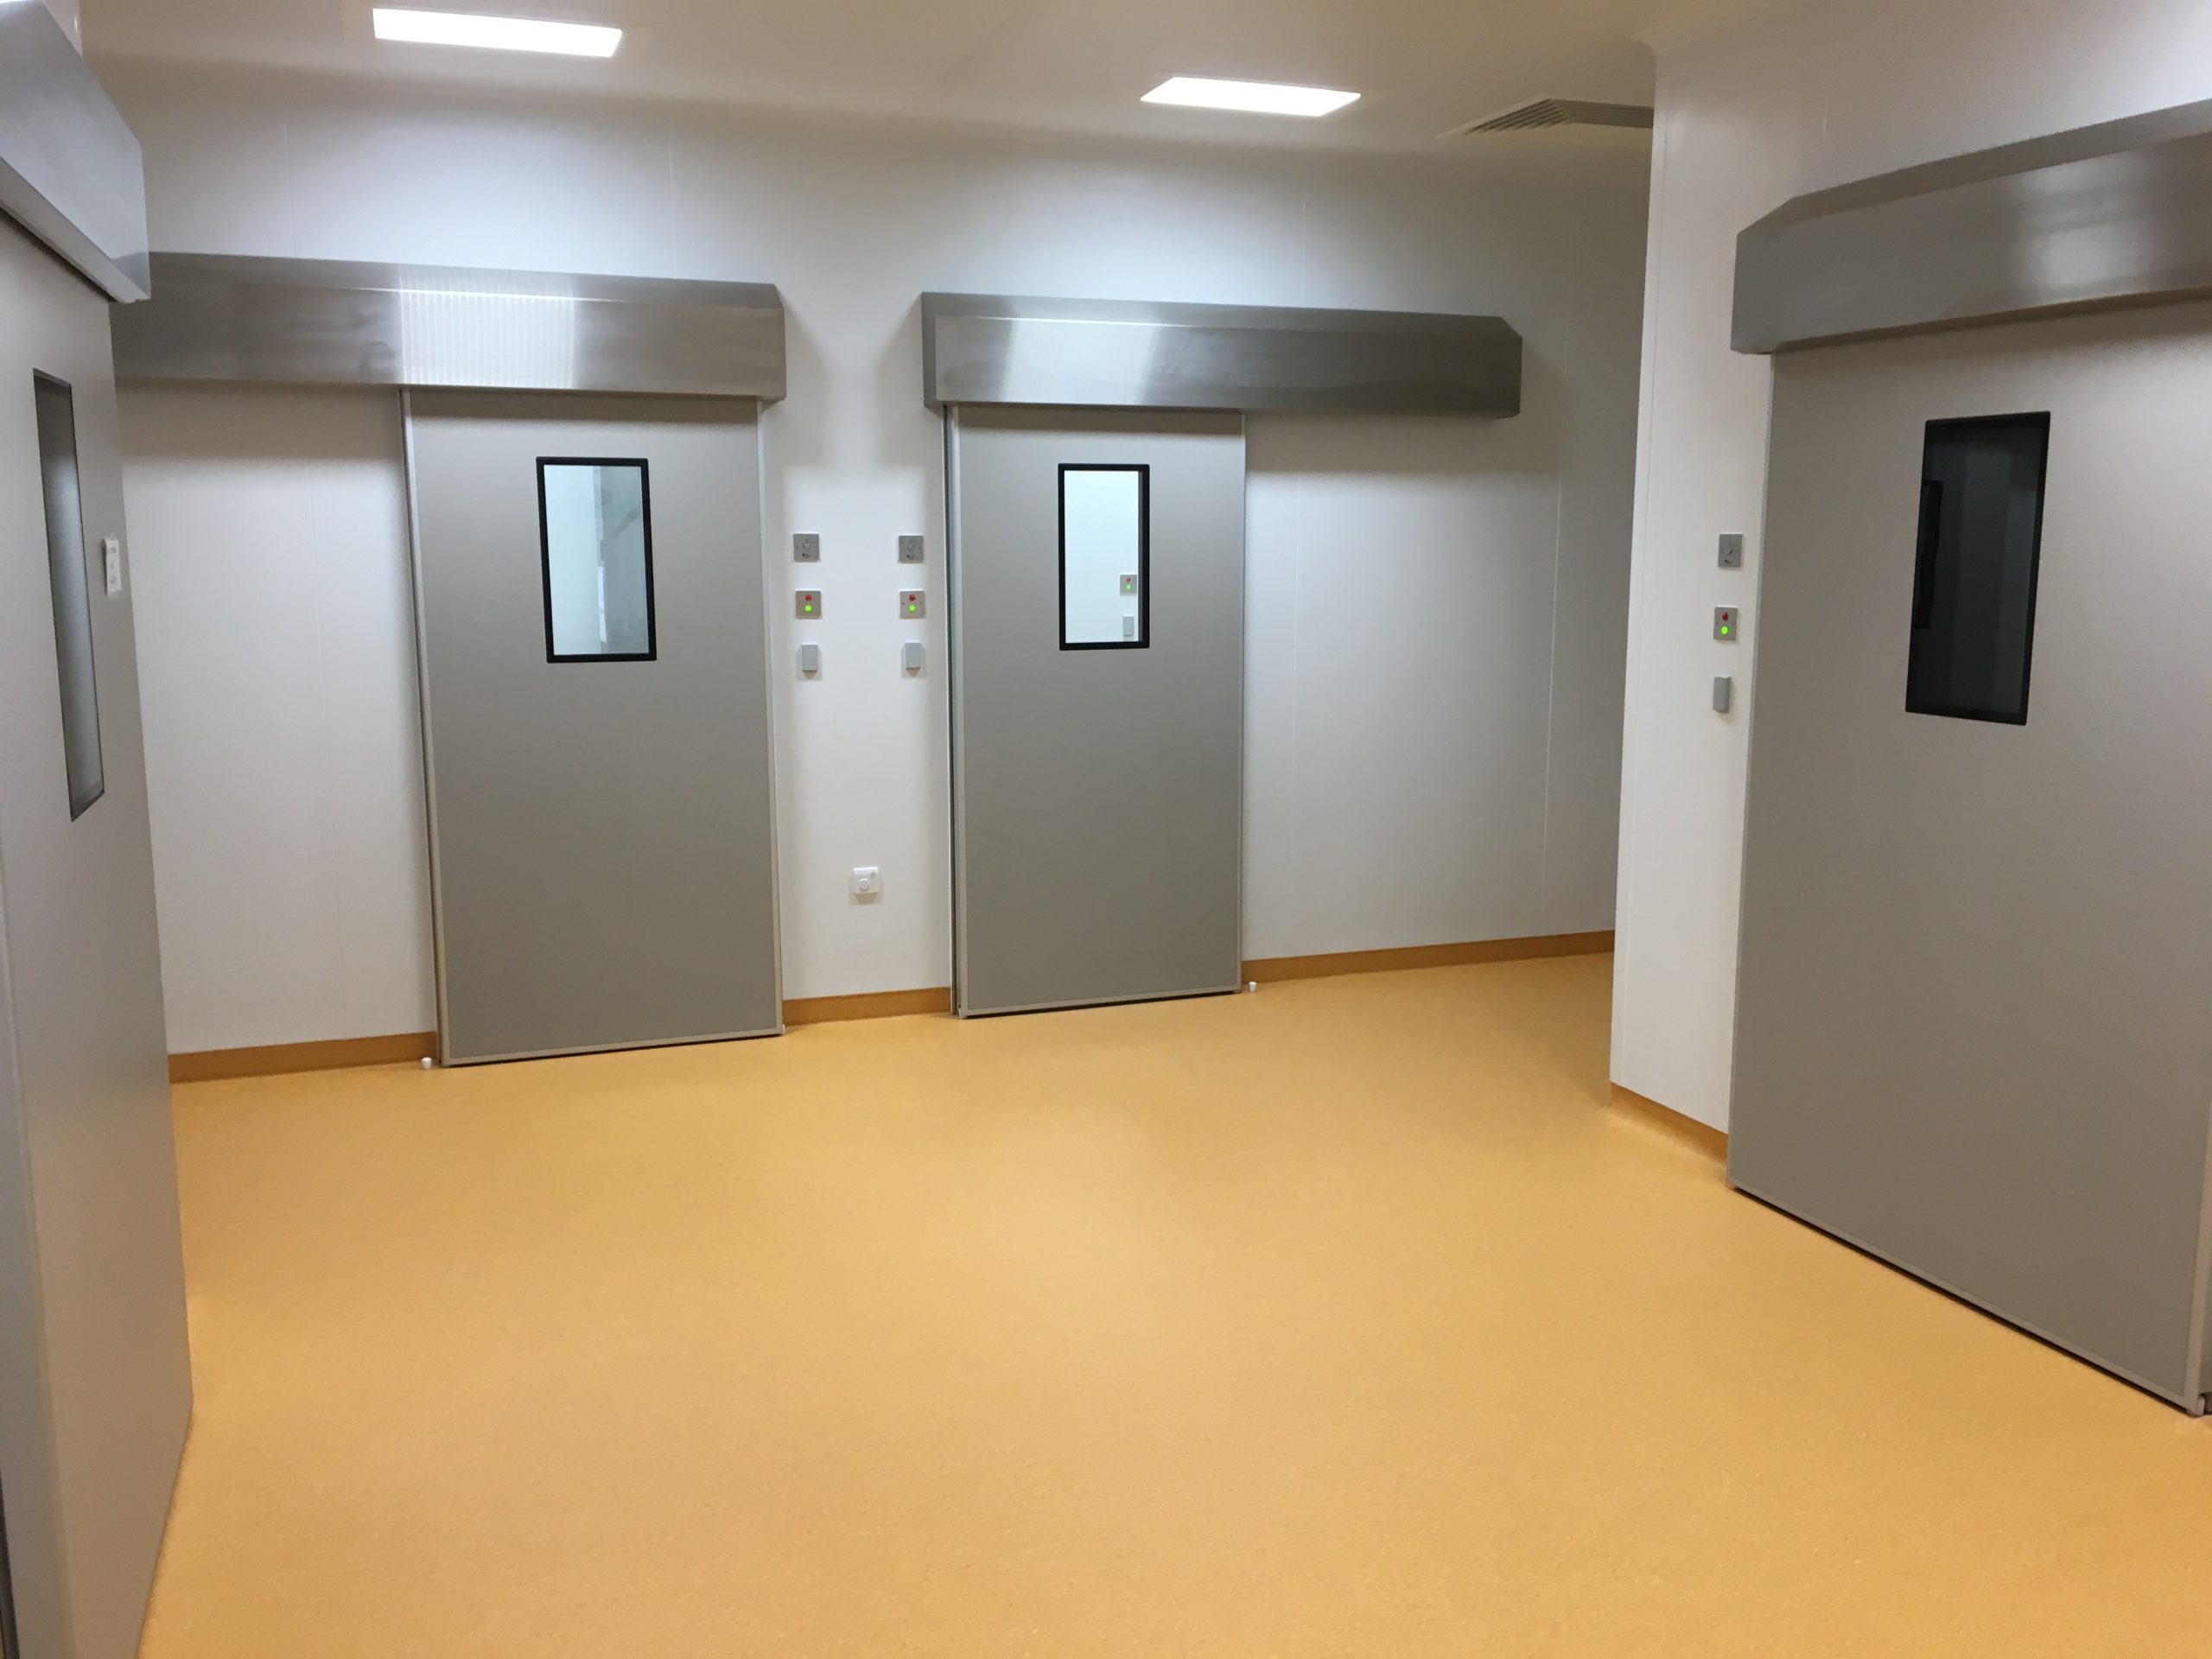 Hermetic Doors Within Cleanrooms